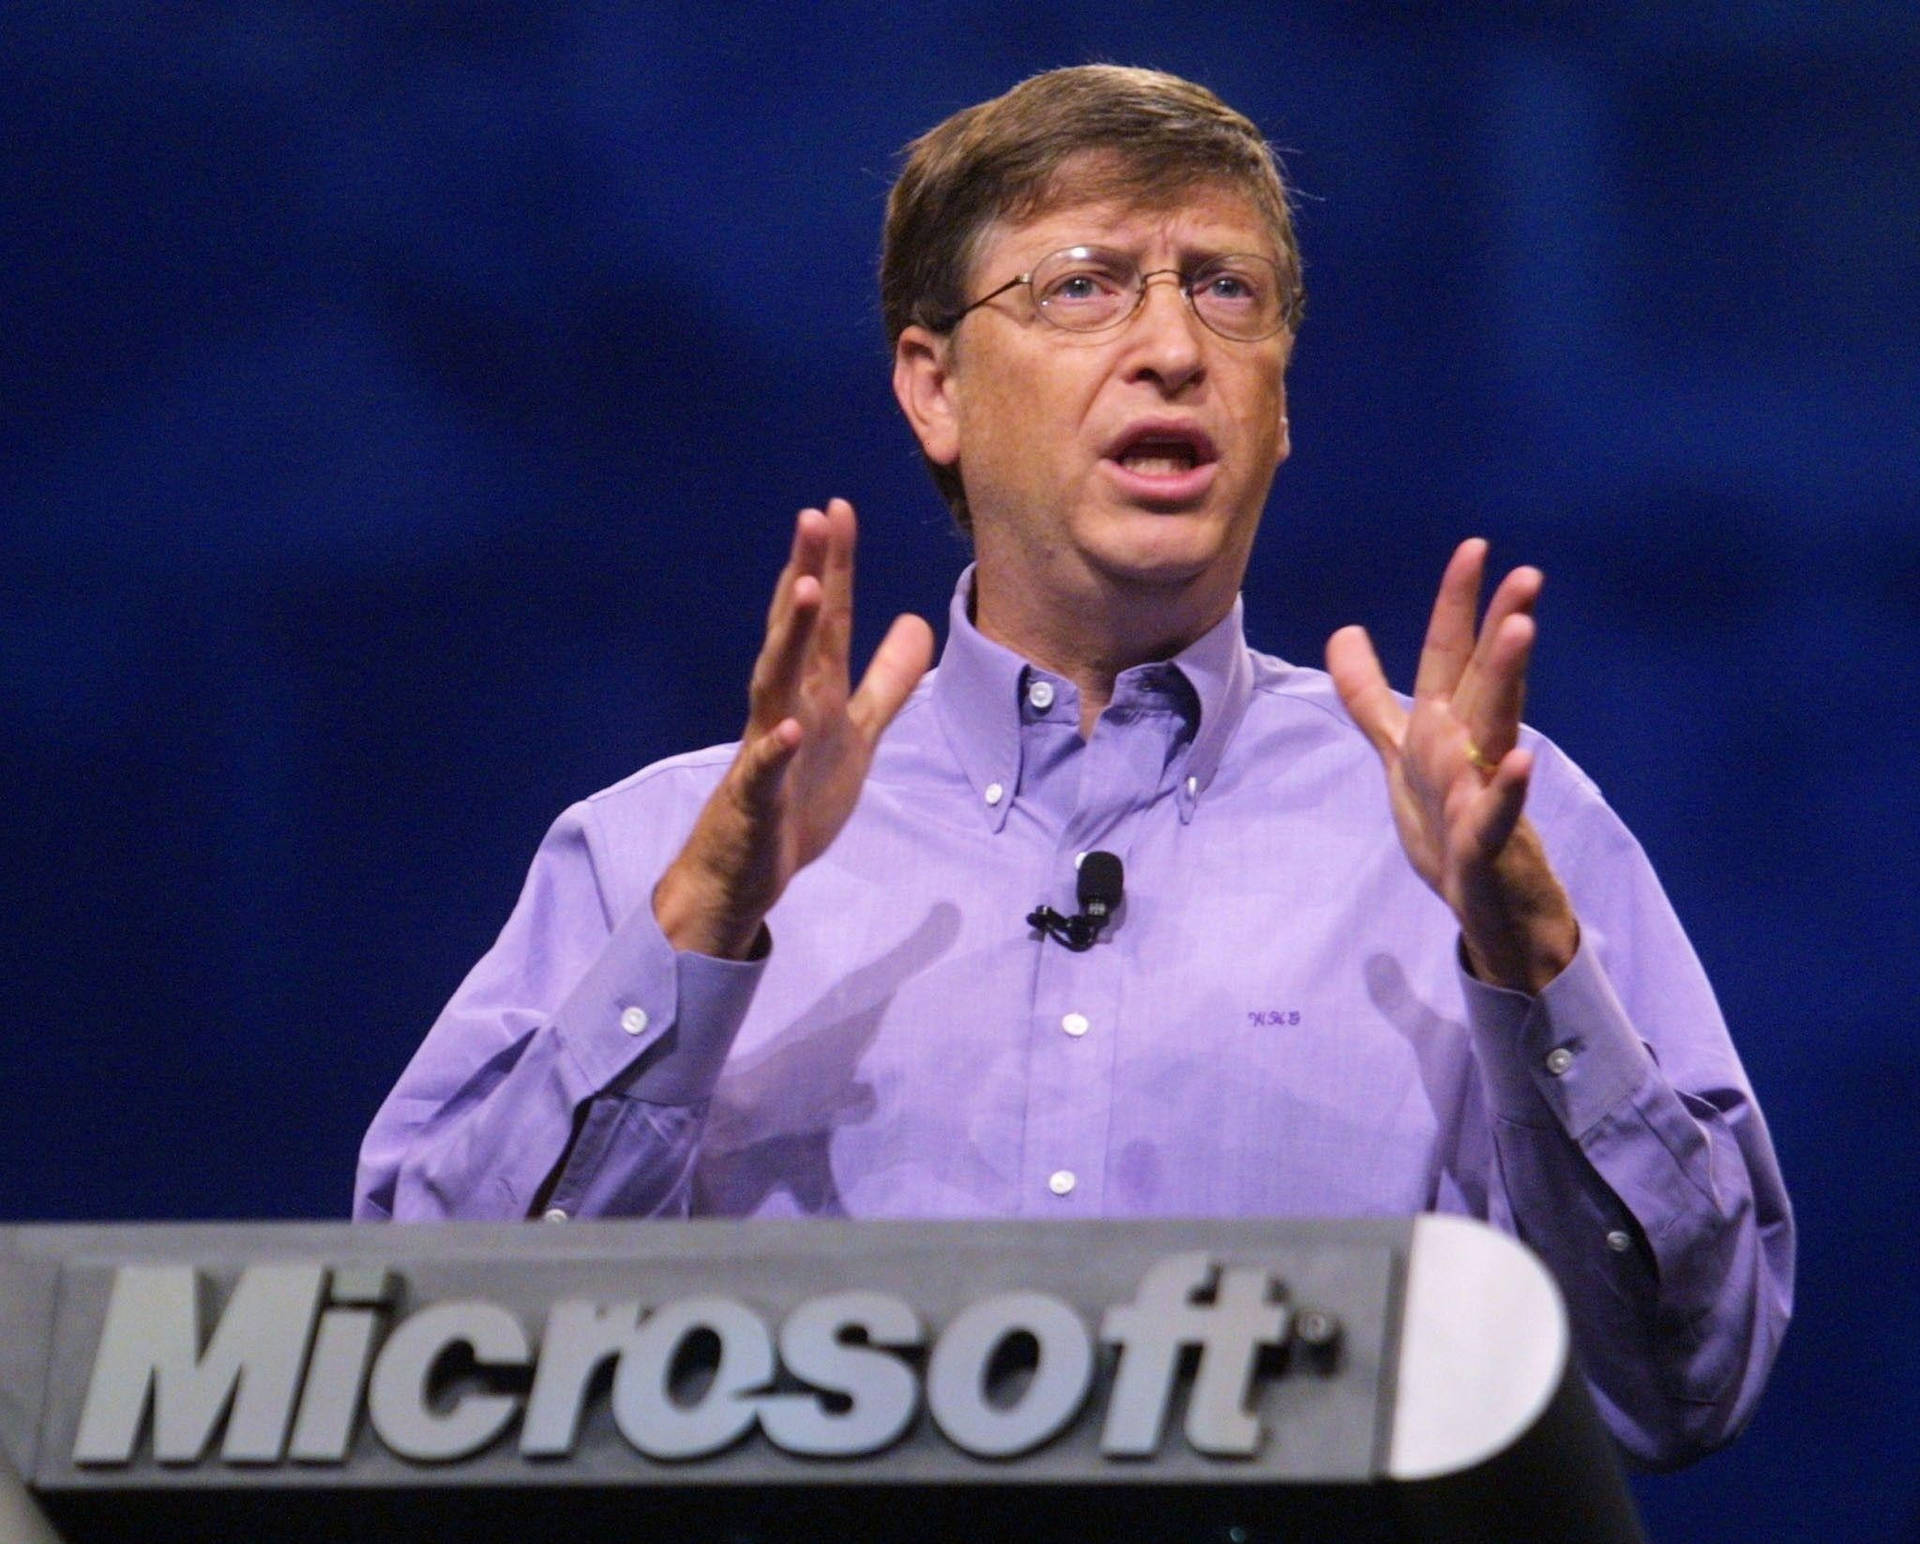 Microsoft Founder Bill Gates